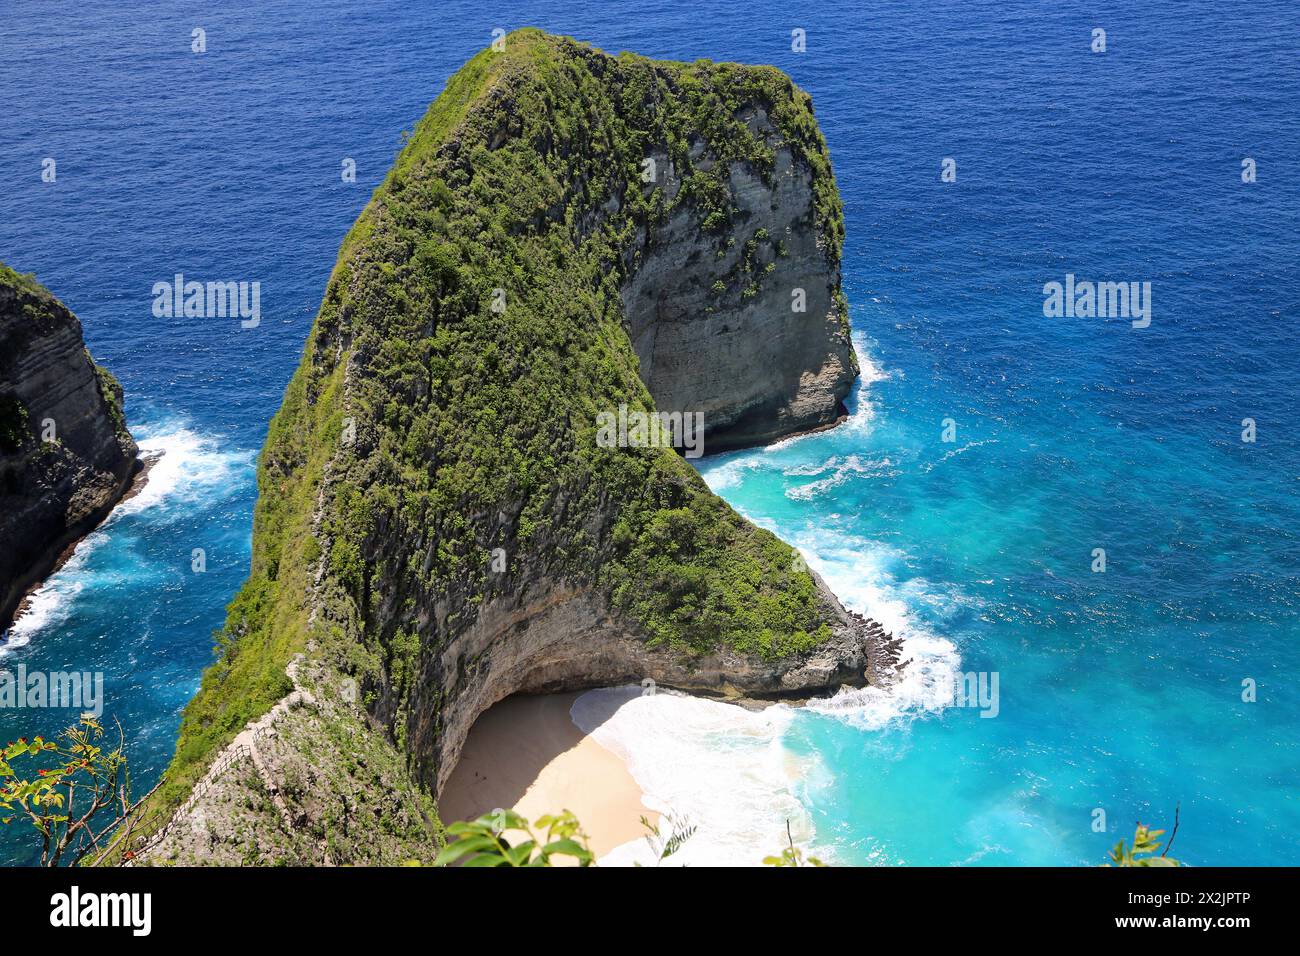 The trail on the cliff - Kelingking Beach - Nusa Penida, Indonesia Stock Photo